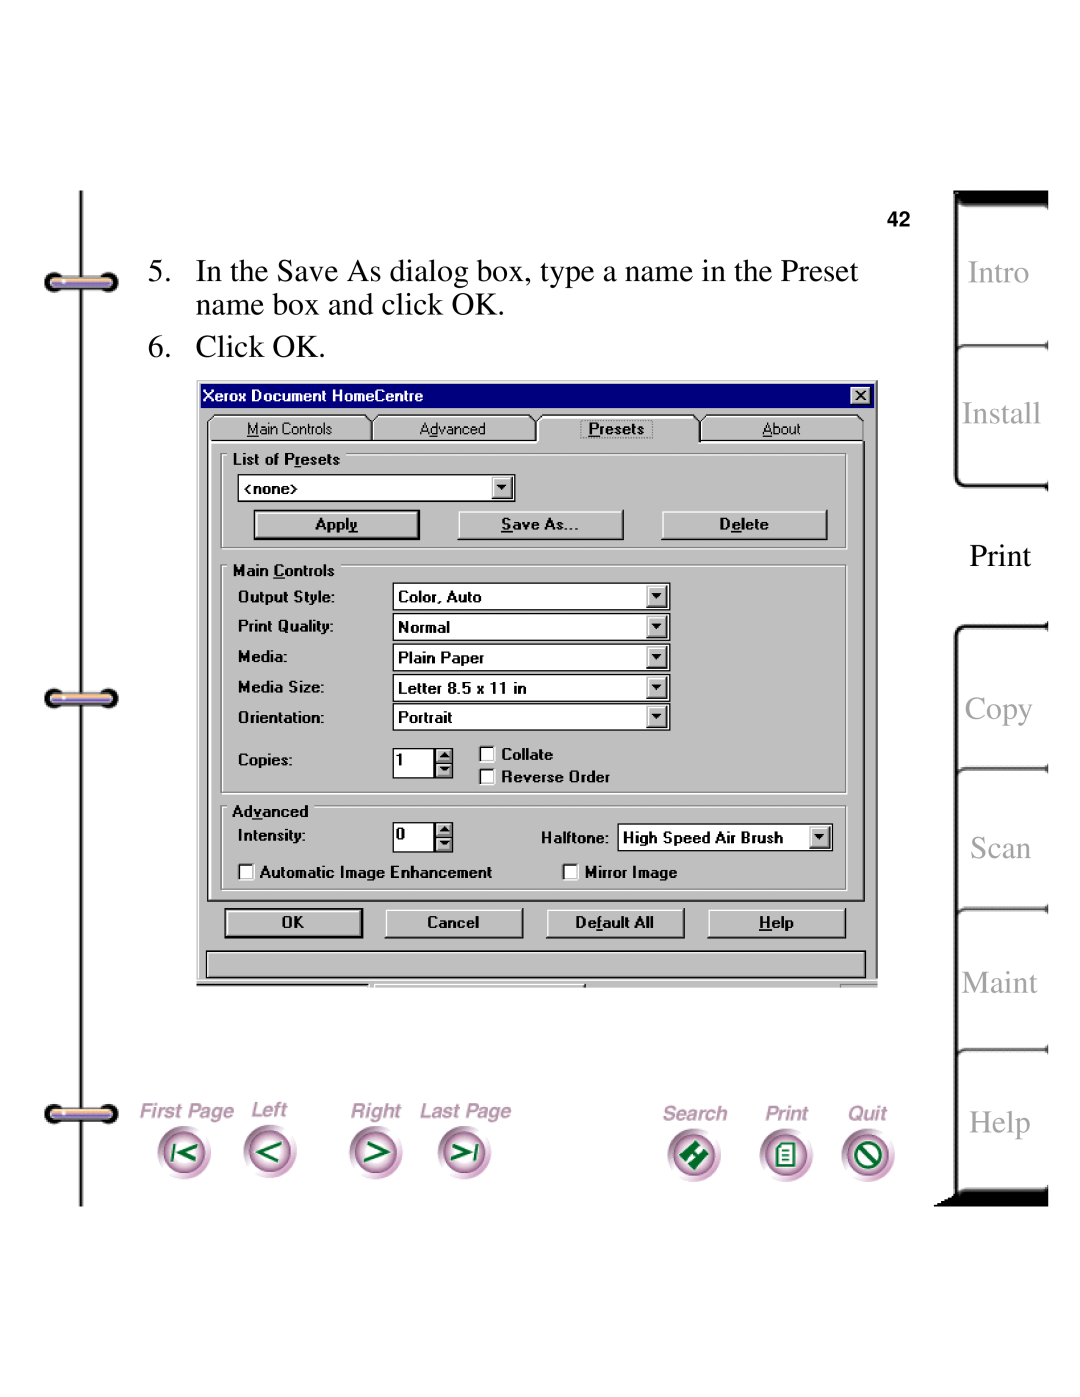 Xerox Document HomeCentre manual Click OK, Intro Install, Print, Copy Scan Maint, Help 